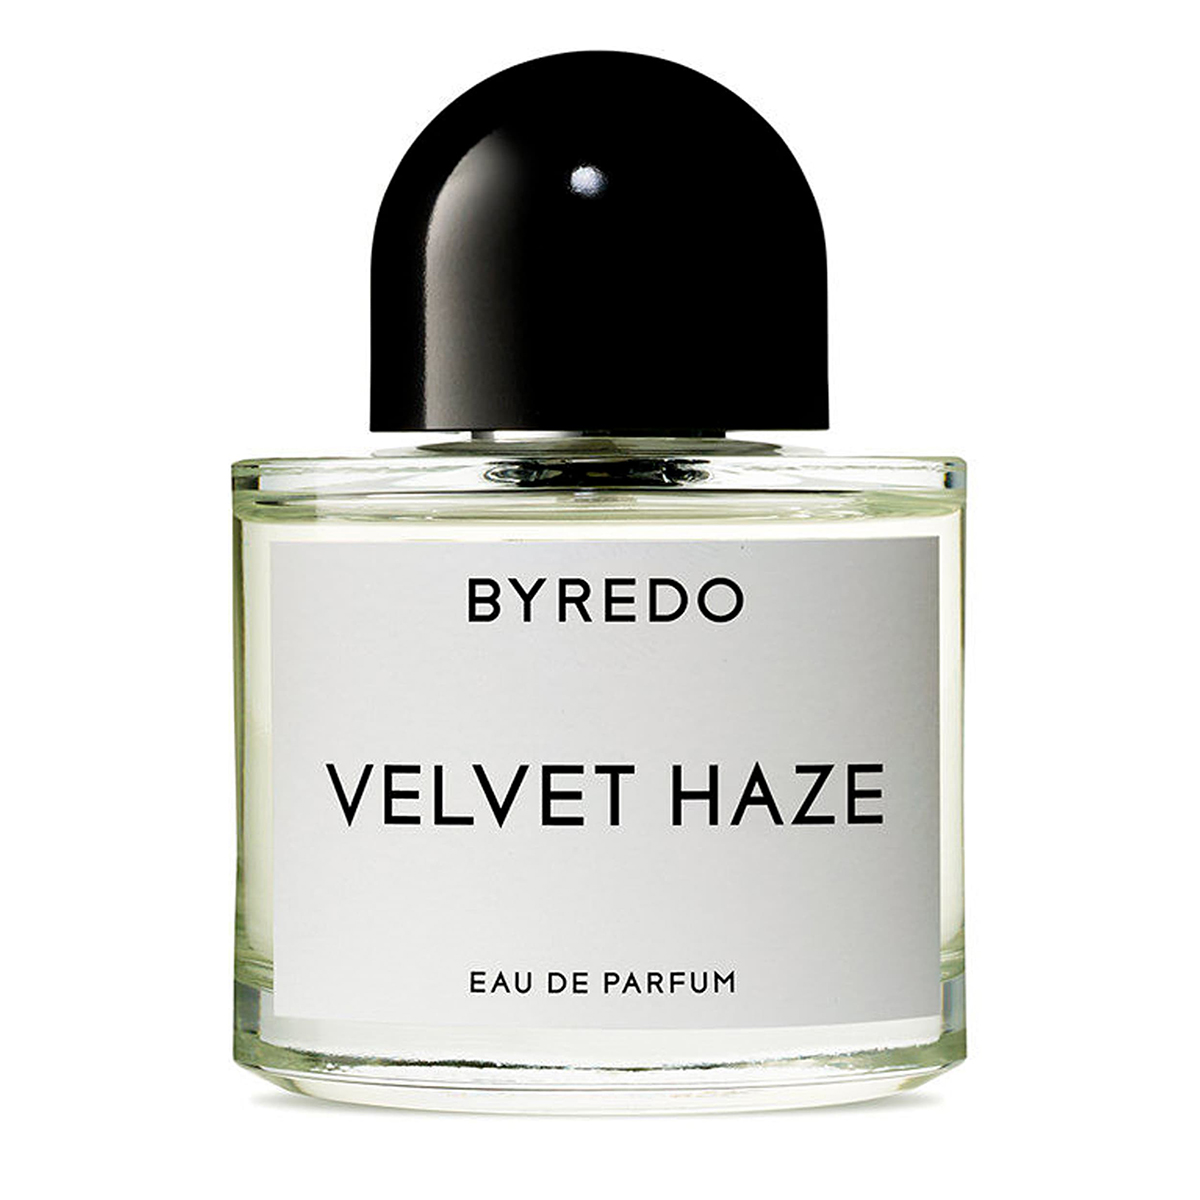 Byredo Velvet Haze Eau de Parfum, 50ml